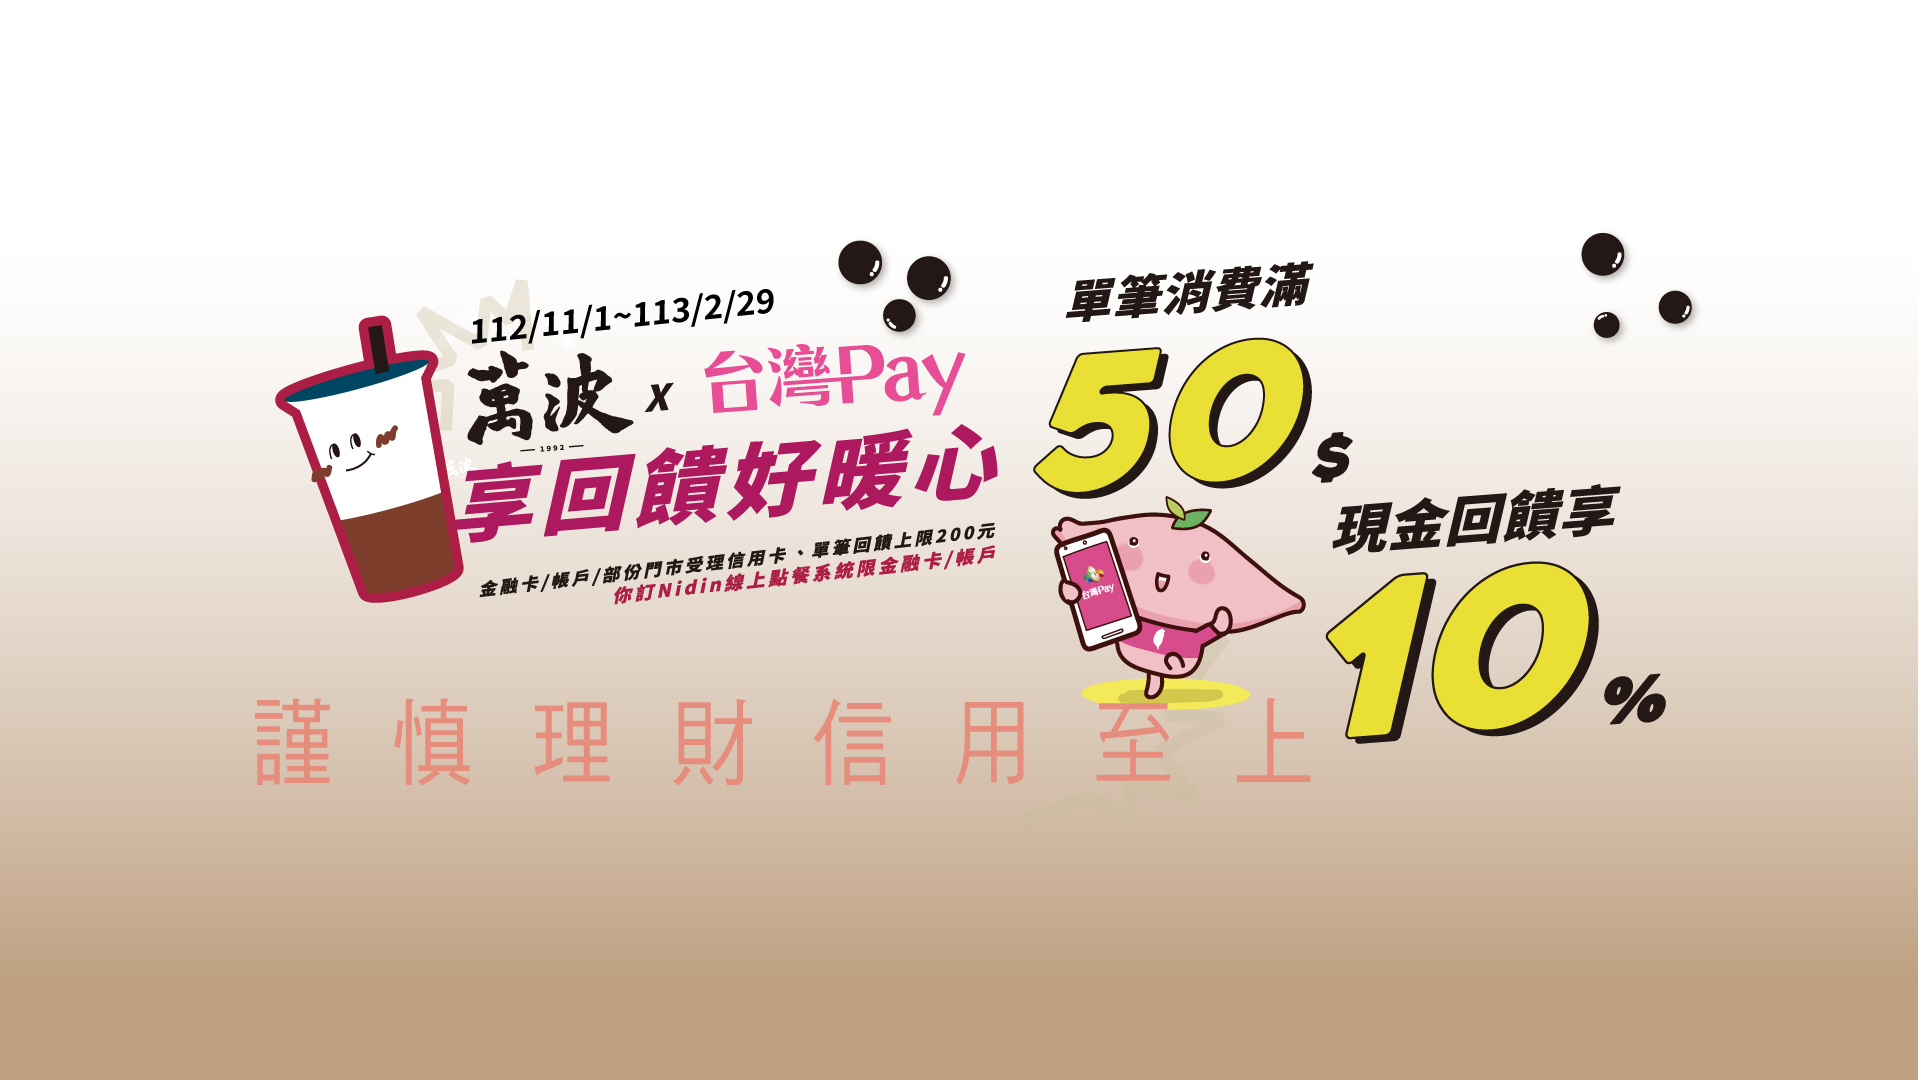 「萬波X台灣Pay 享回饋好暖心」Banner